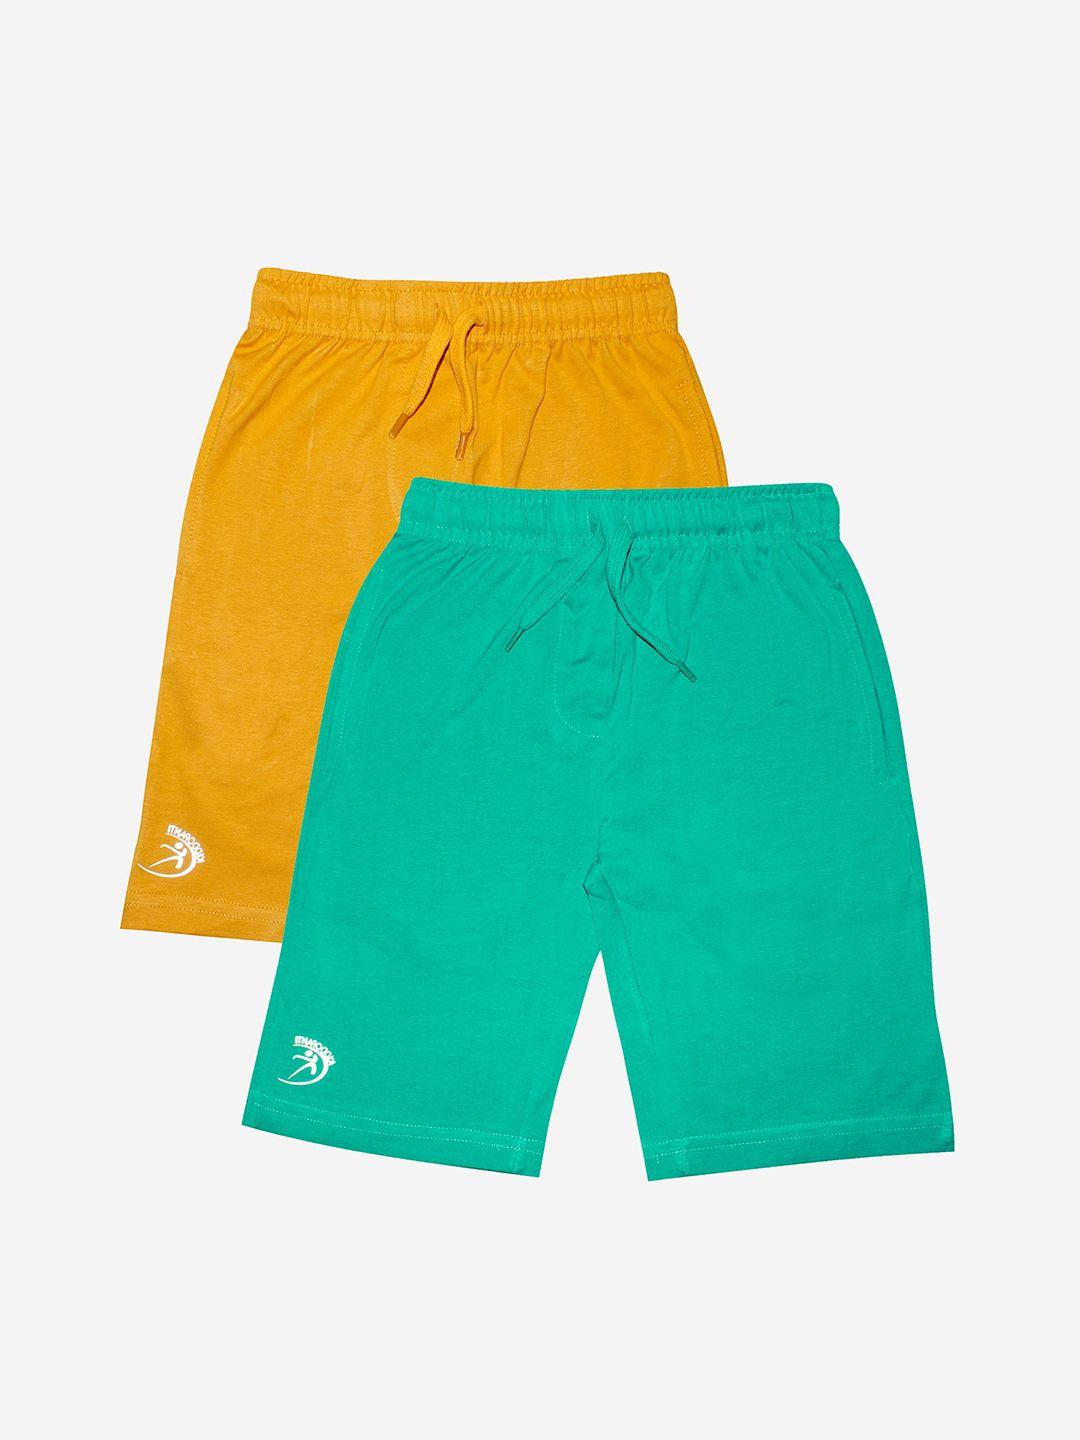 kiddopanti set of 2 boys teal & yellow regular fit cotton shorts